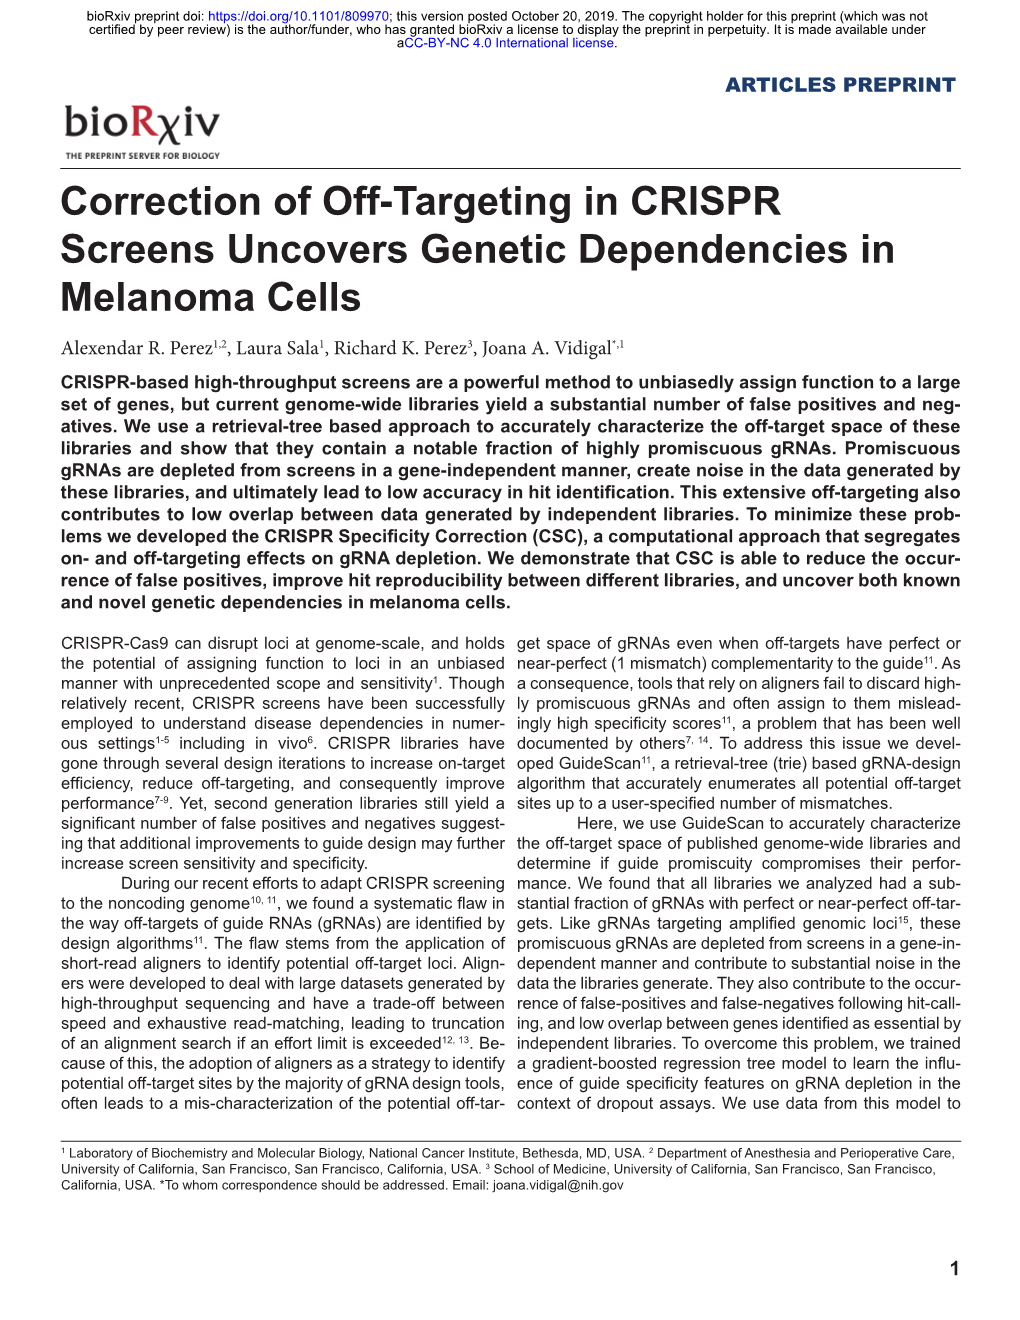 Correction of Off-Targeting in CRISPR Screens Uncovers Genetic Dependencies in Melanoma Cells Alexendar R